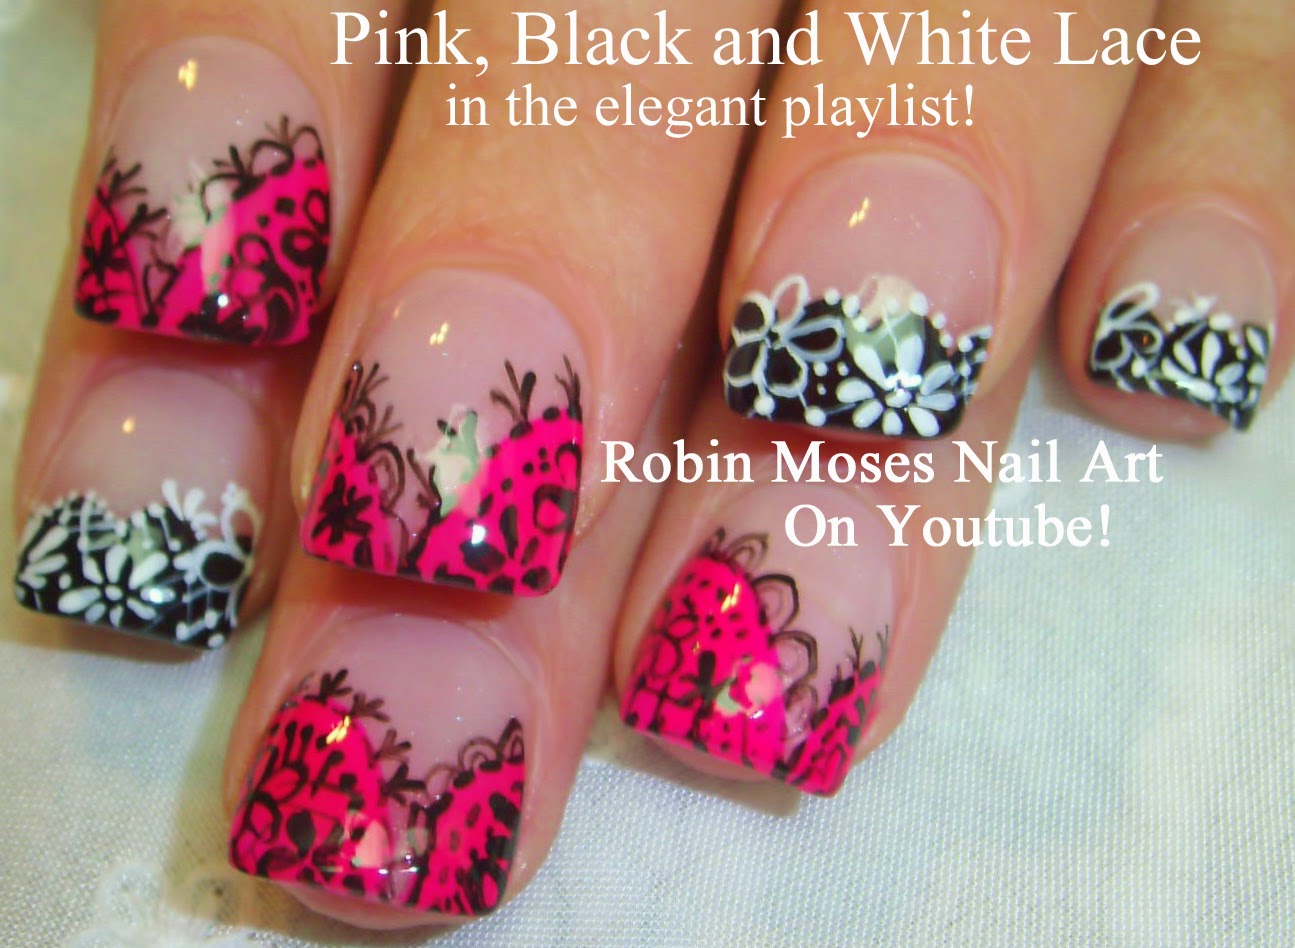 1. Pink and Black Gel Nail Art Designs - wide 6